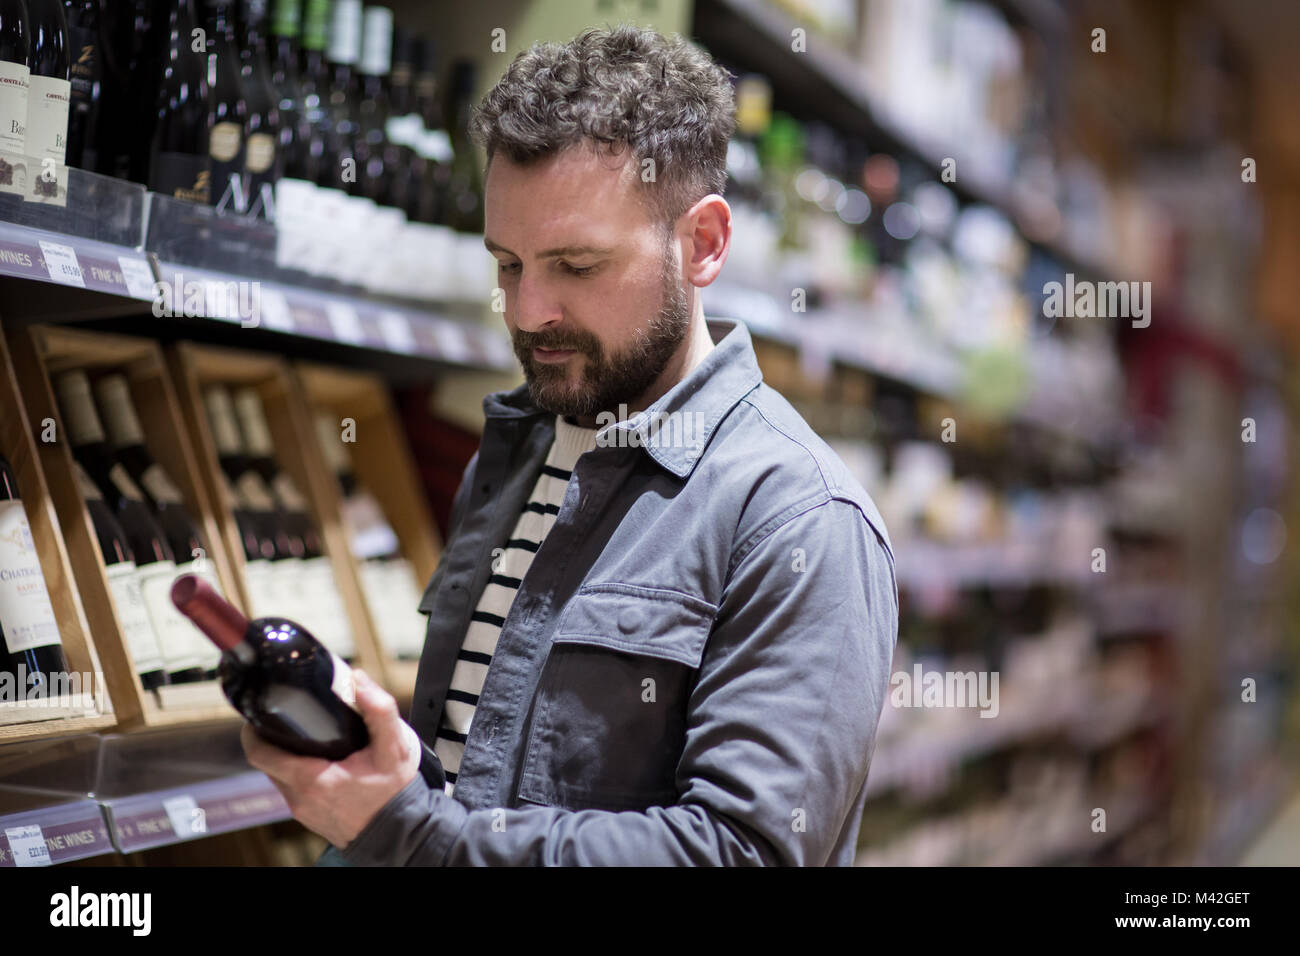 Man choosing wine in grocery store Stock Photo